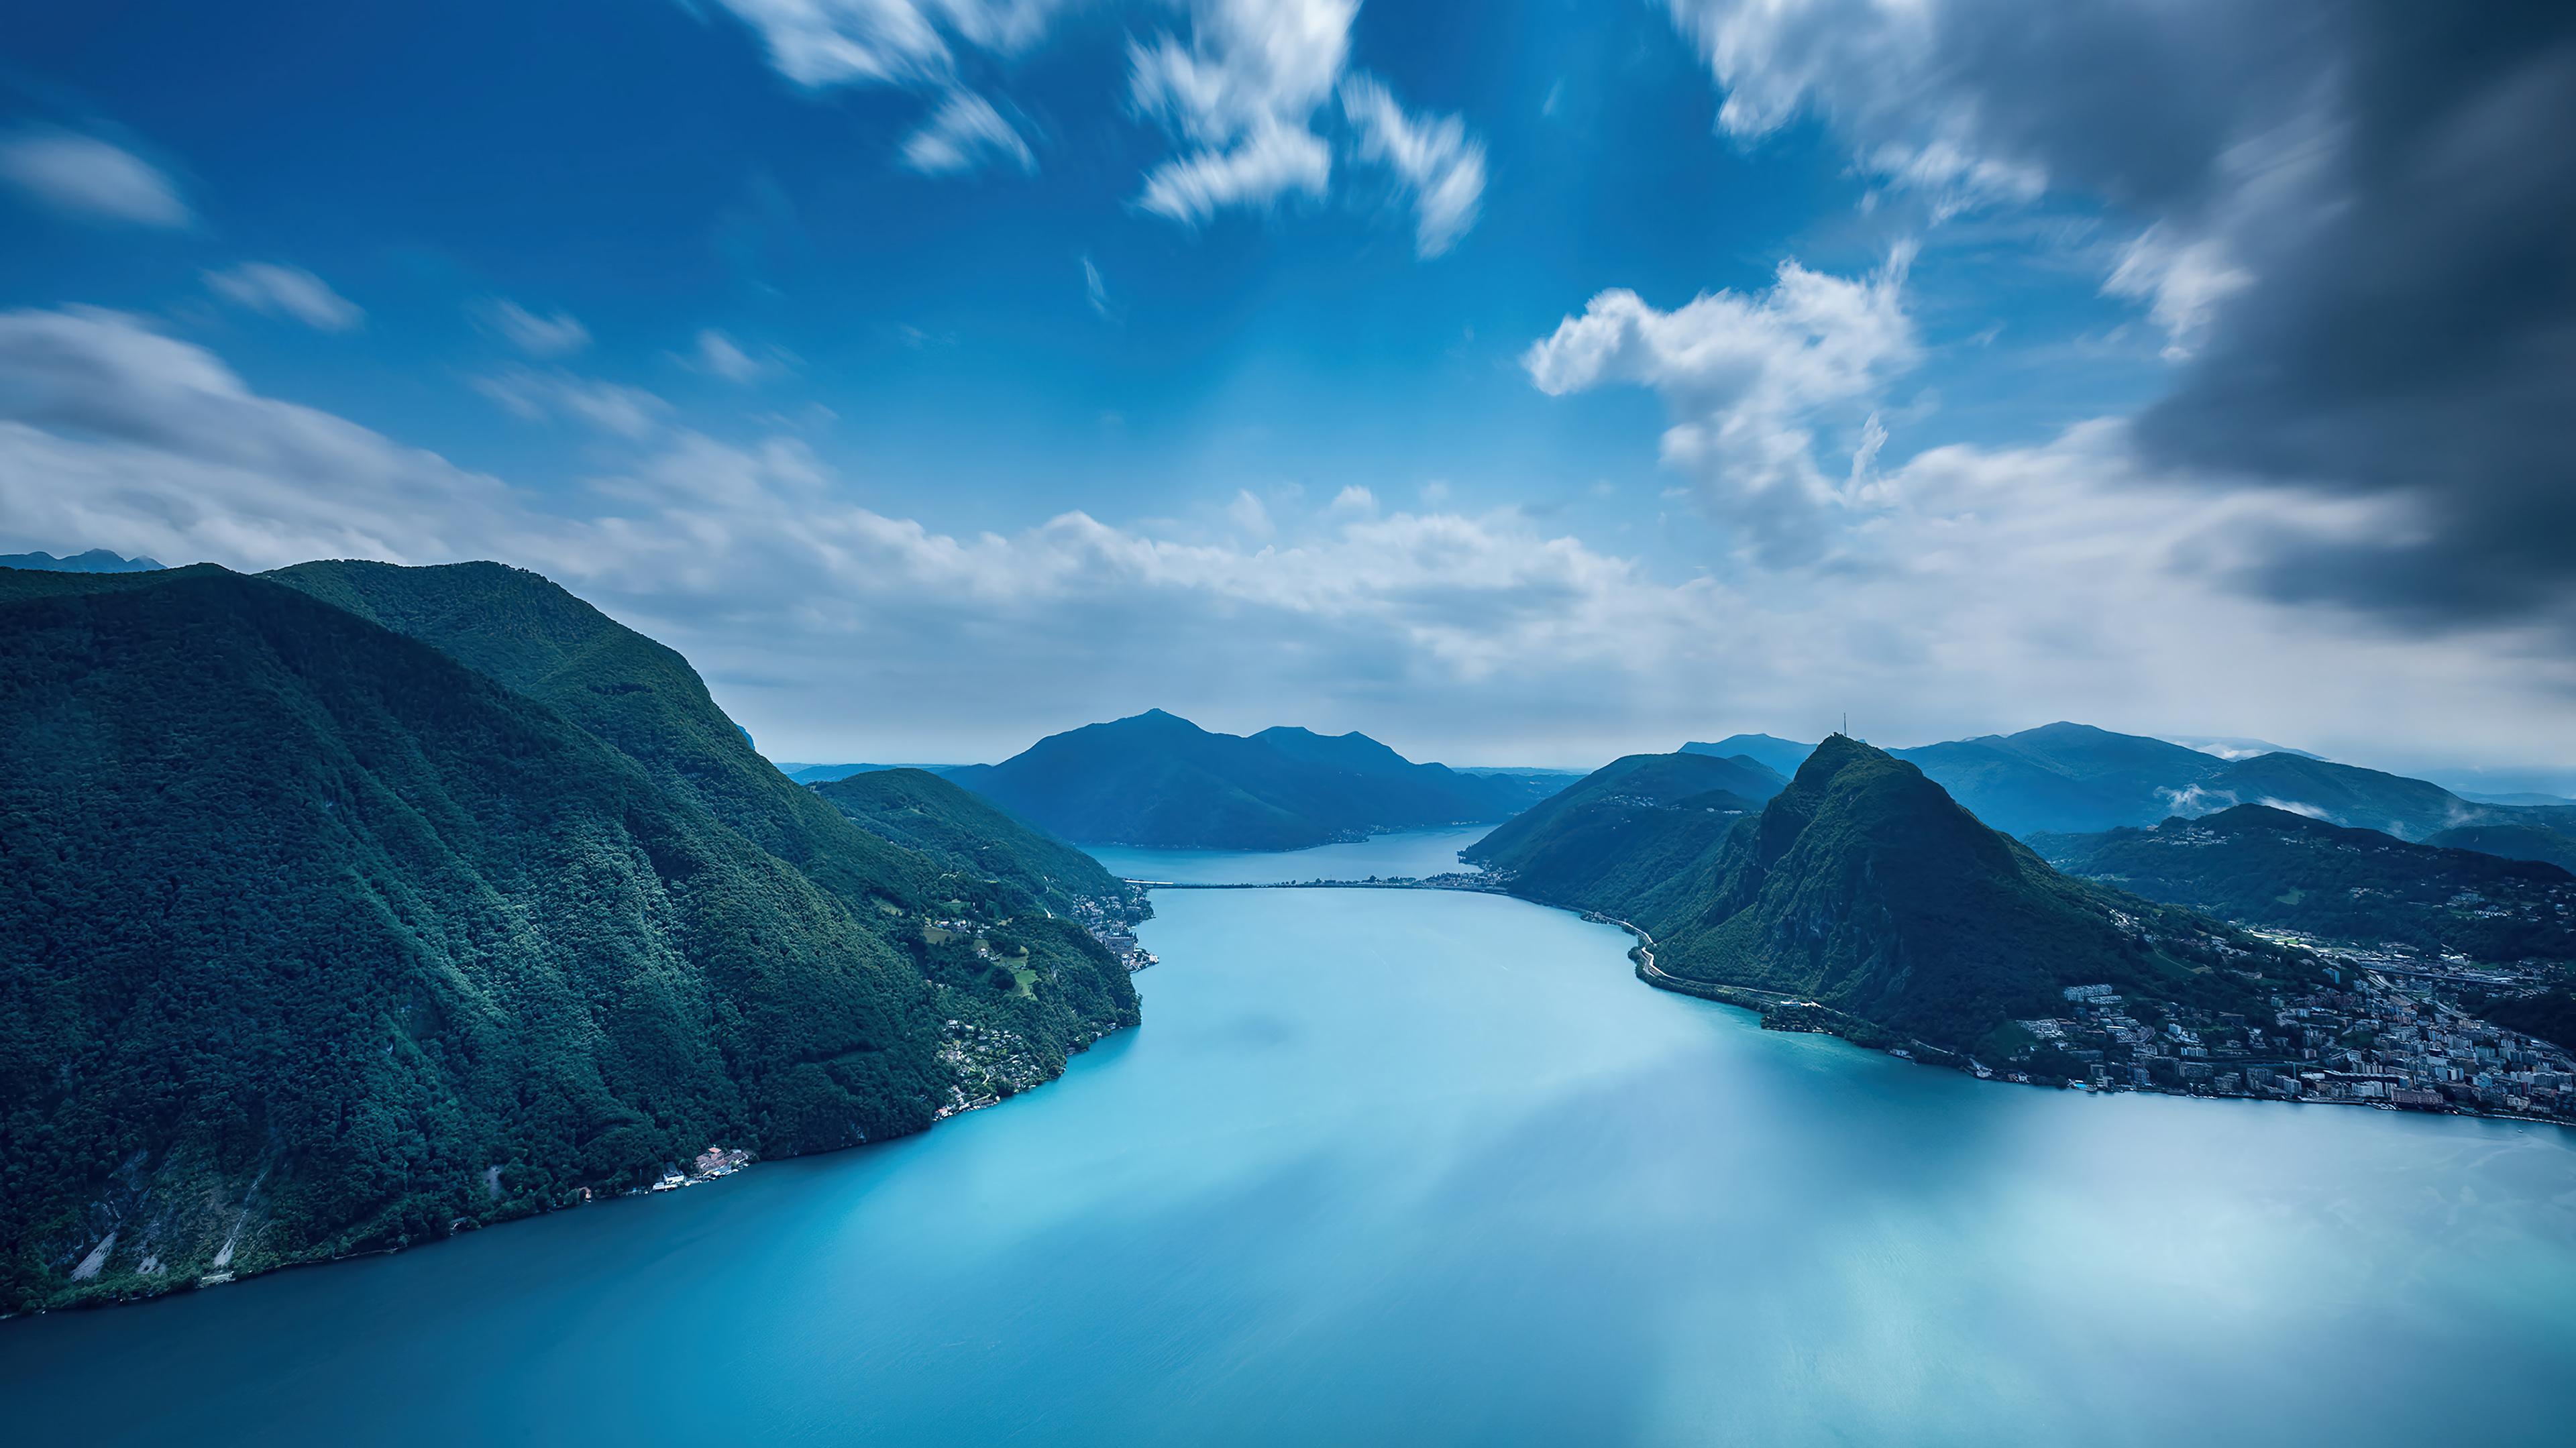 Lake Lugano Switzerland Mountain Scenery Wallpaper 4k HD Pc 8110g